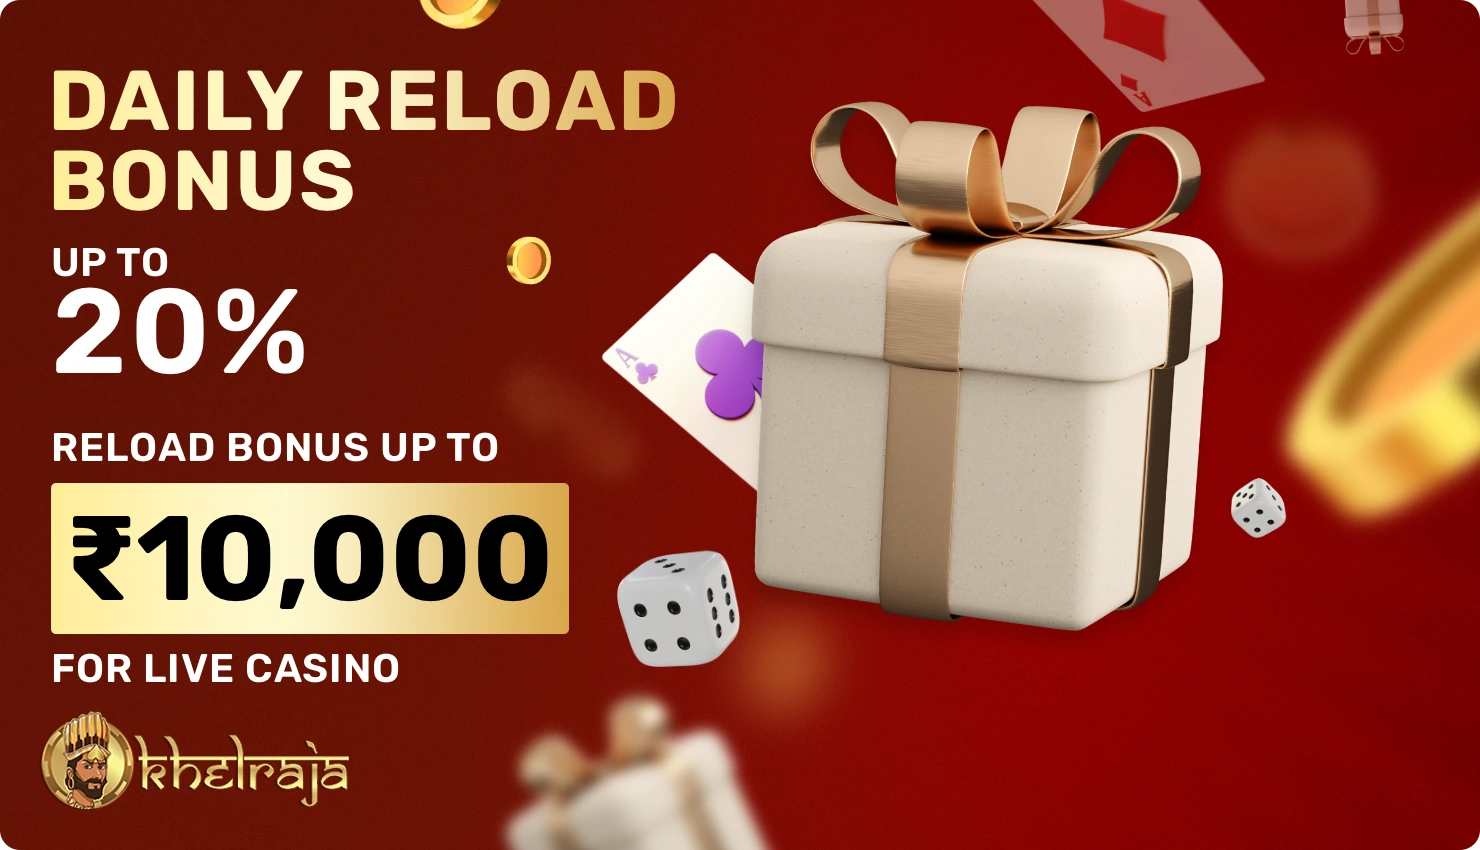 Daily reload bonus for live casino at Khelraja